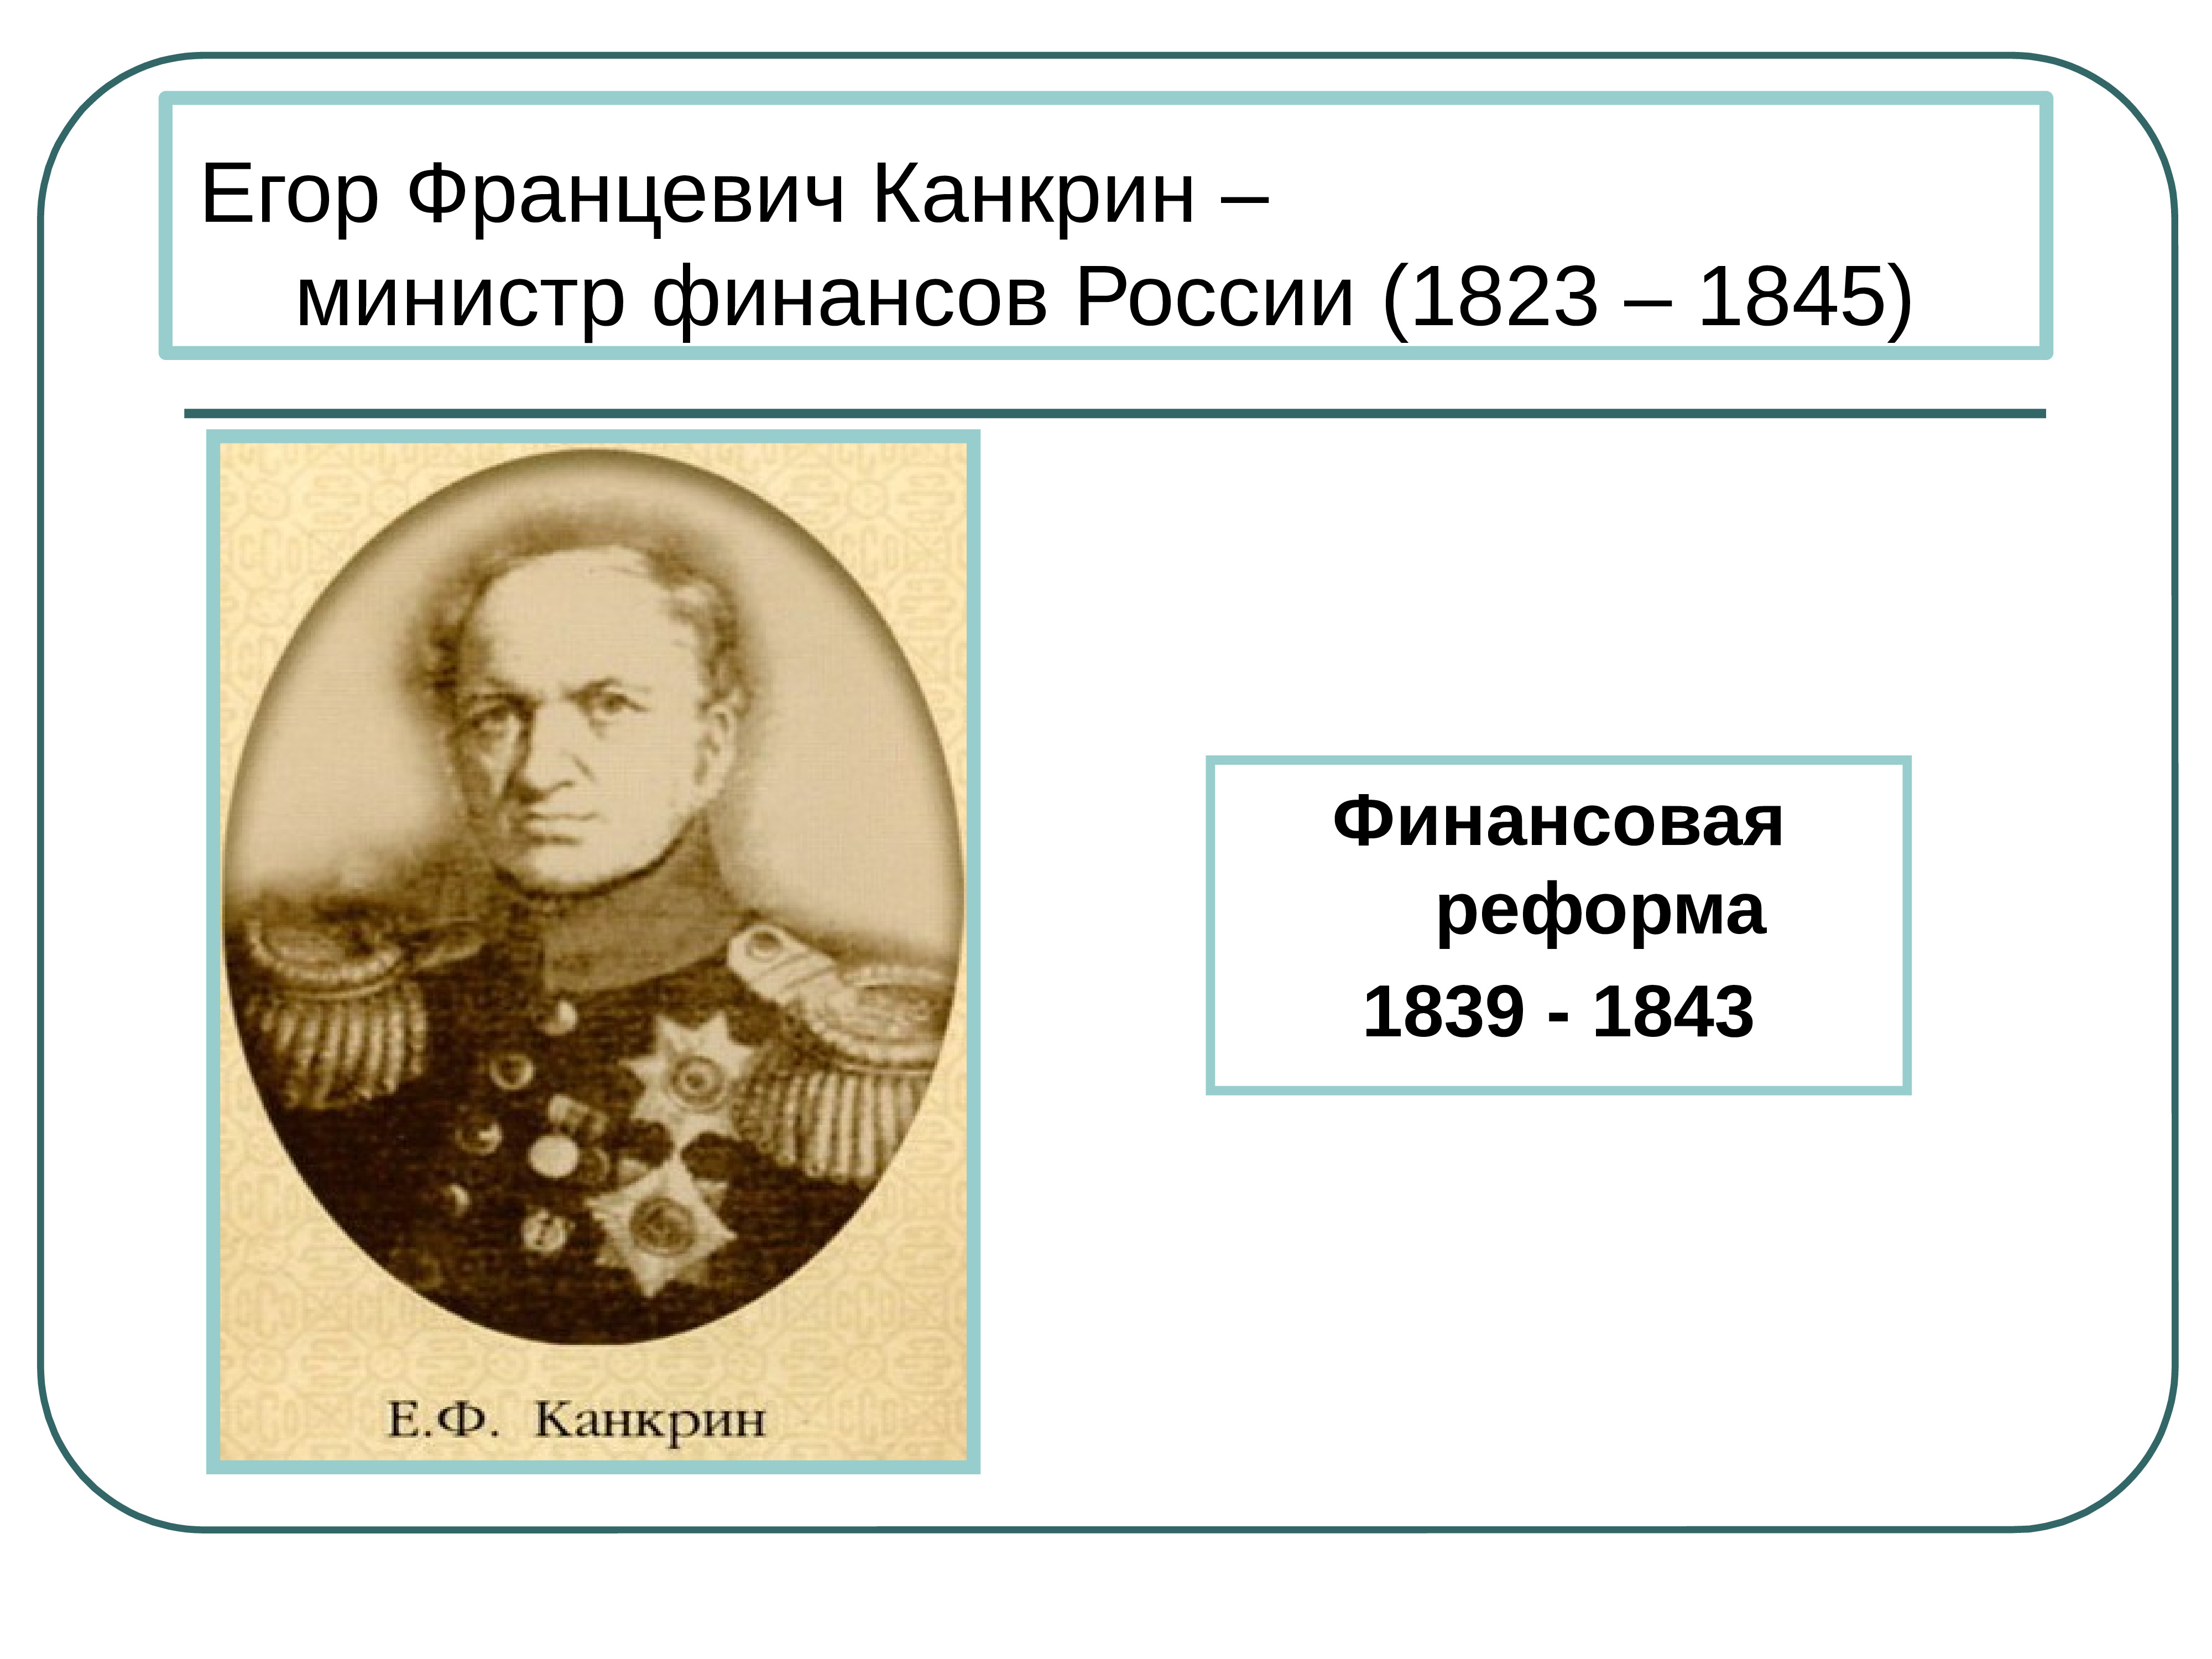 Реформа канкрина кратко. 1839-1843 Министр финансов.